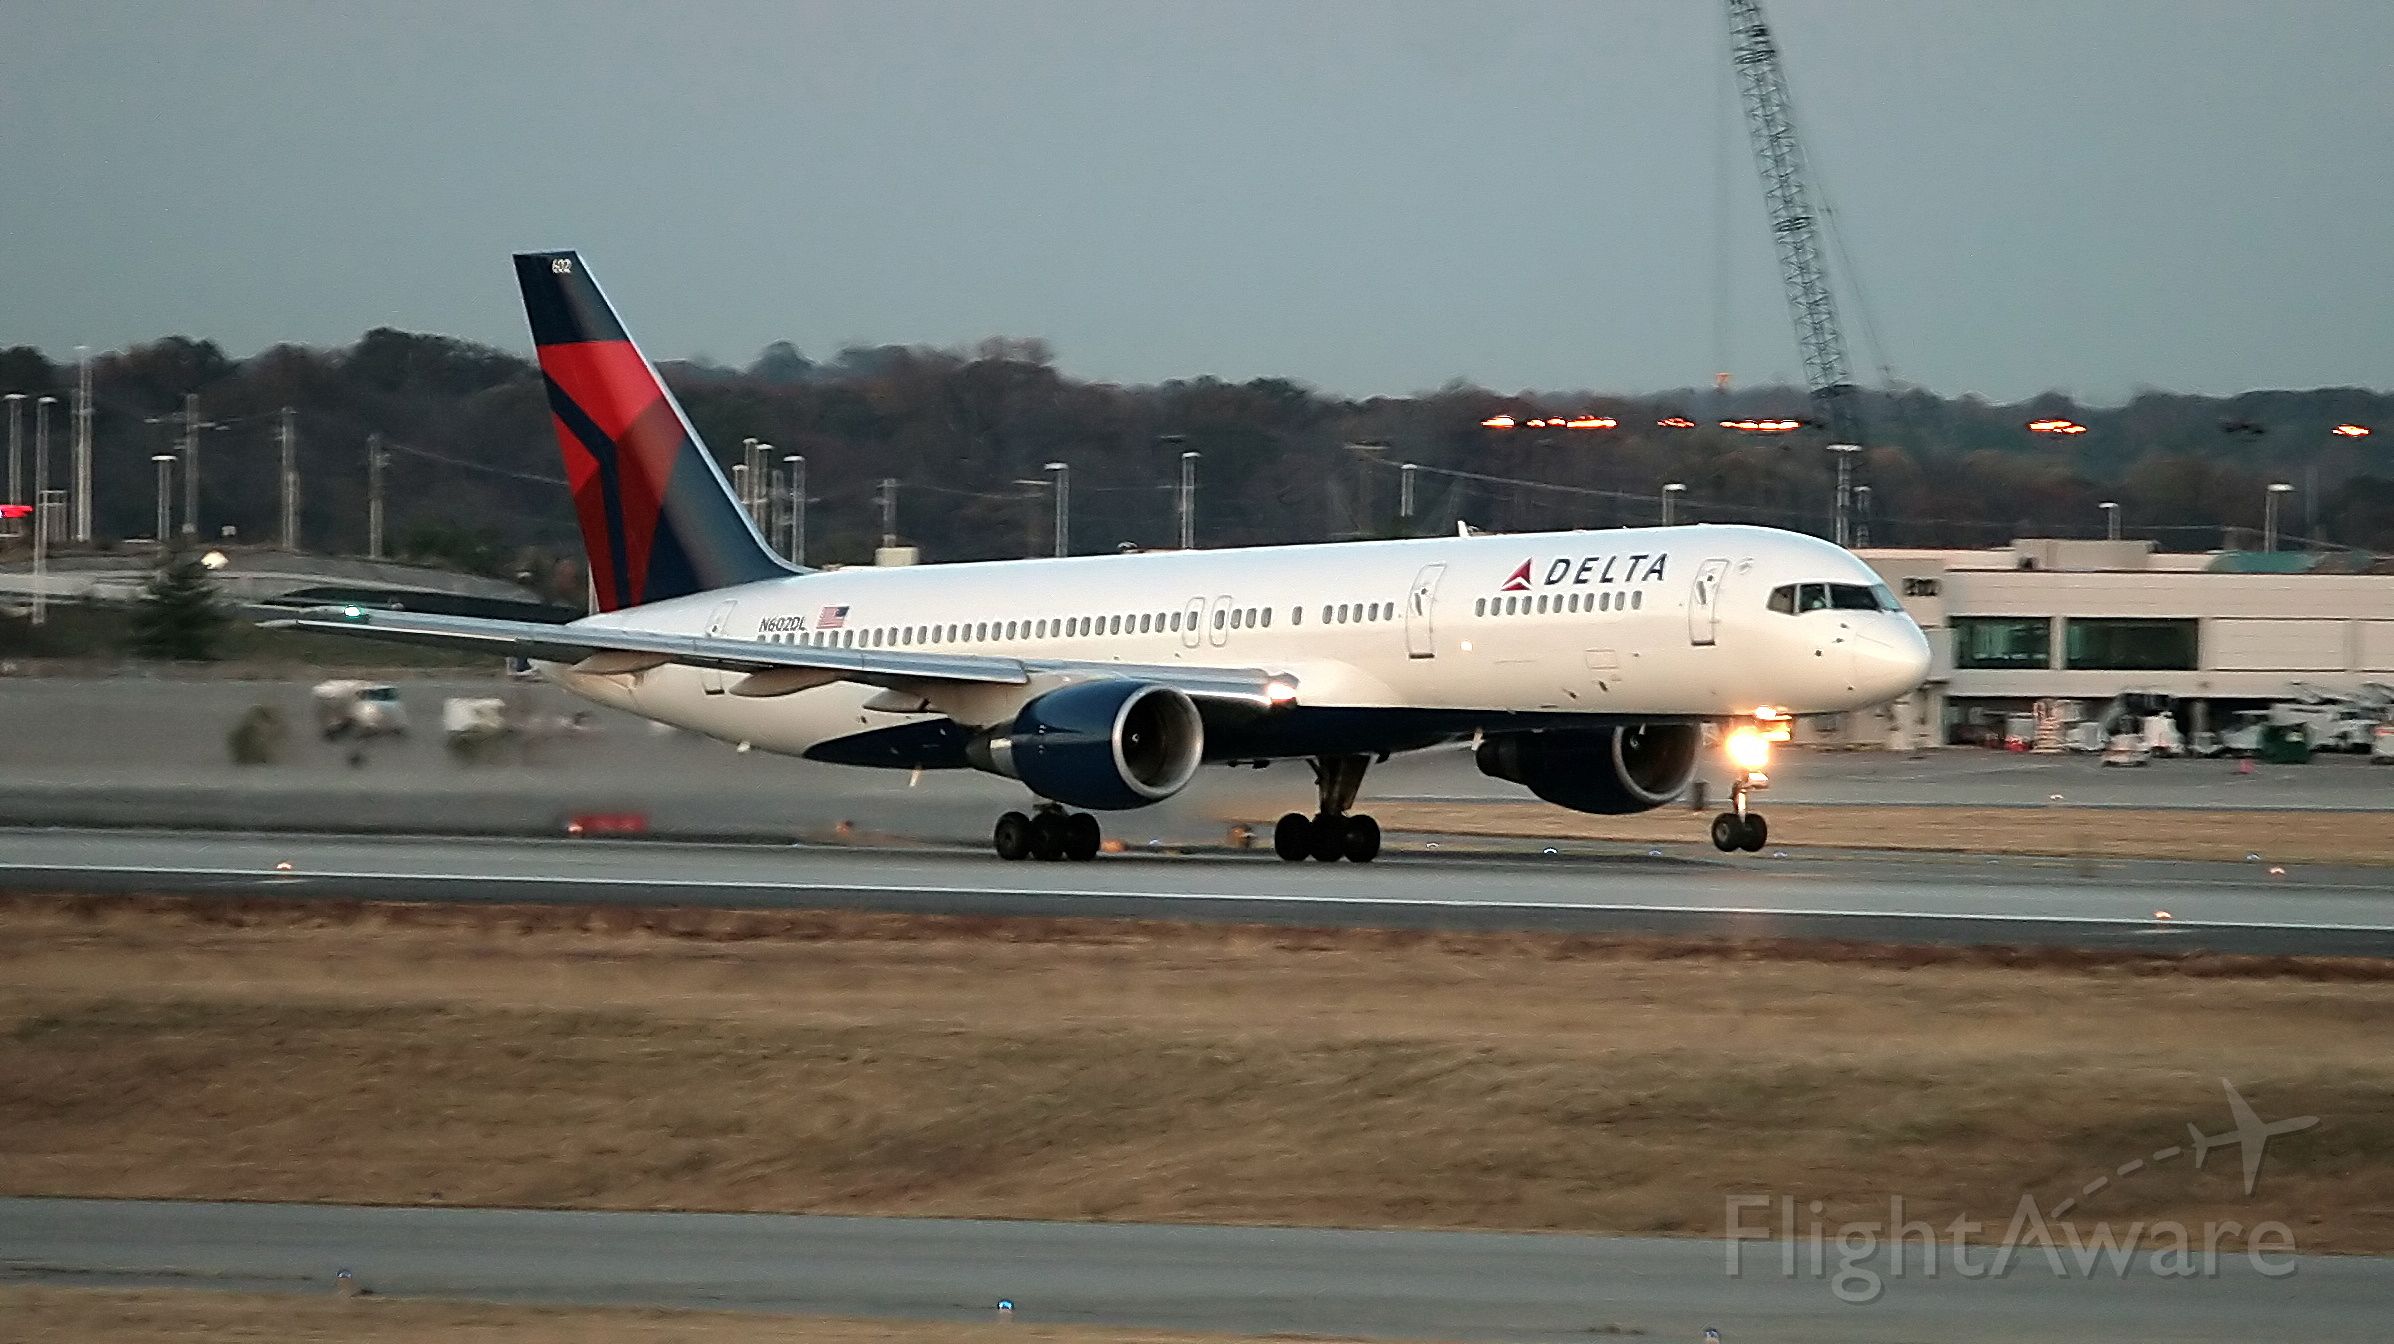 Boeing 757-200 (N602DL) - Departing Nashville for Atlanta on runway 20R